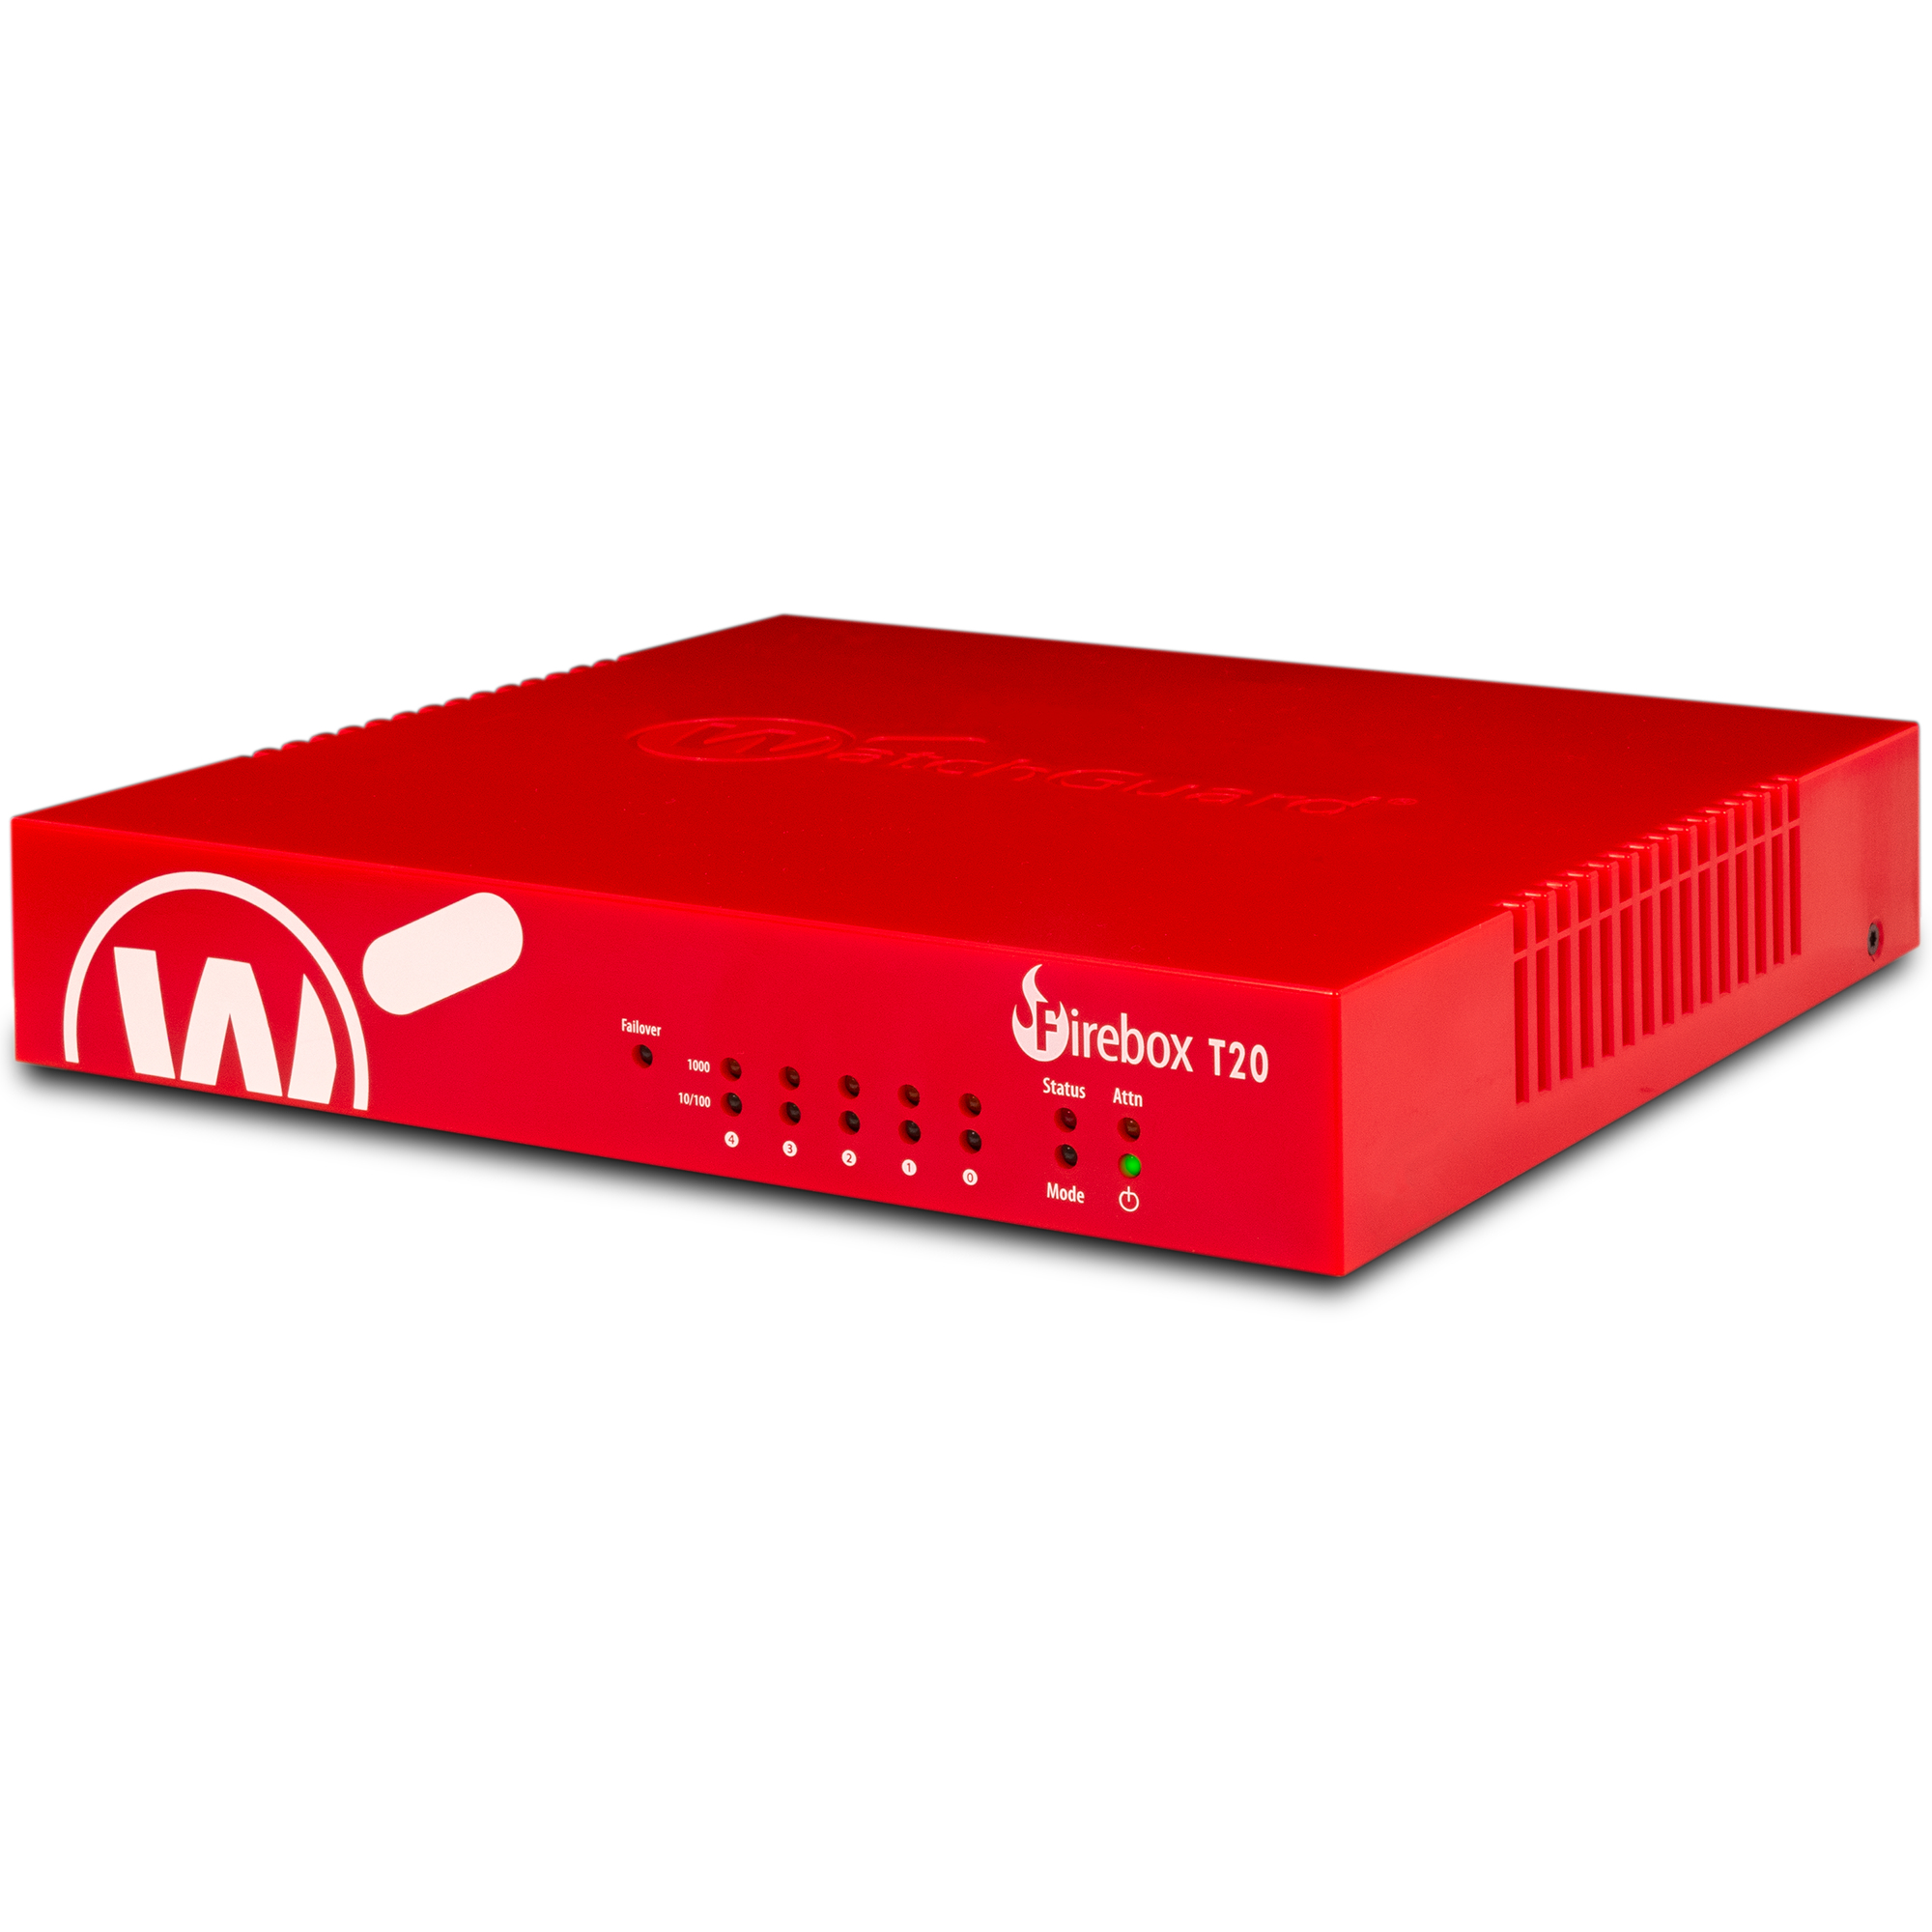 WatchGuard Firebox T20 with 3-yr Basic Security Suite (WW)